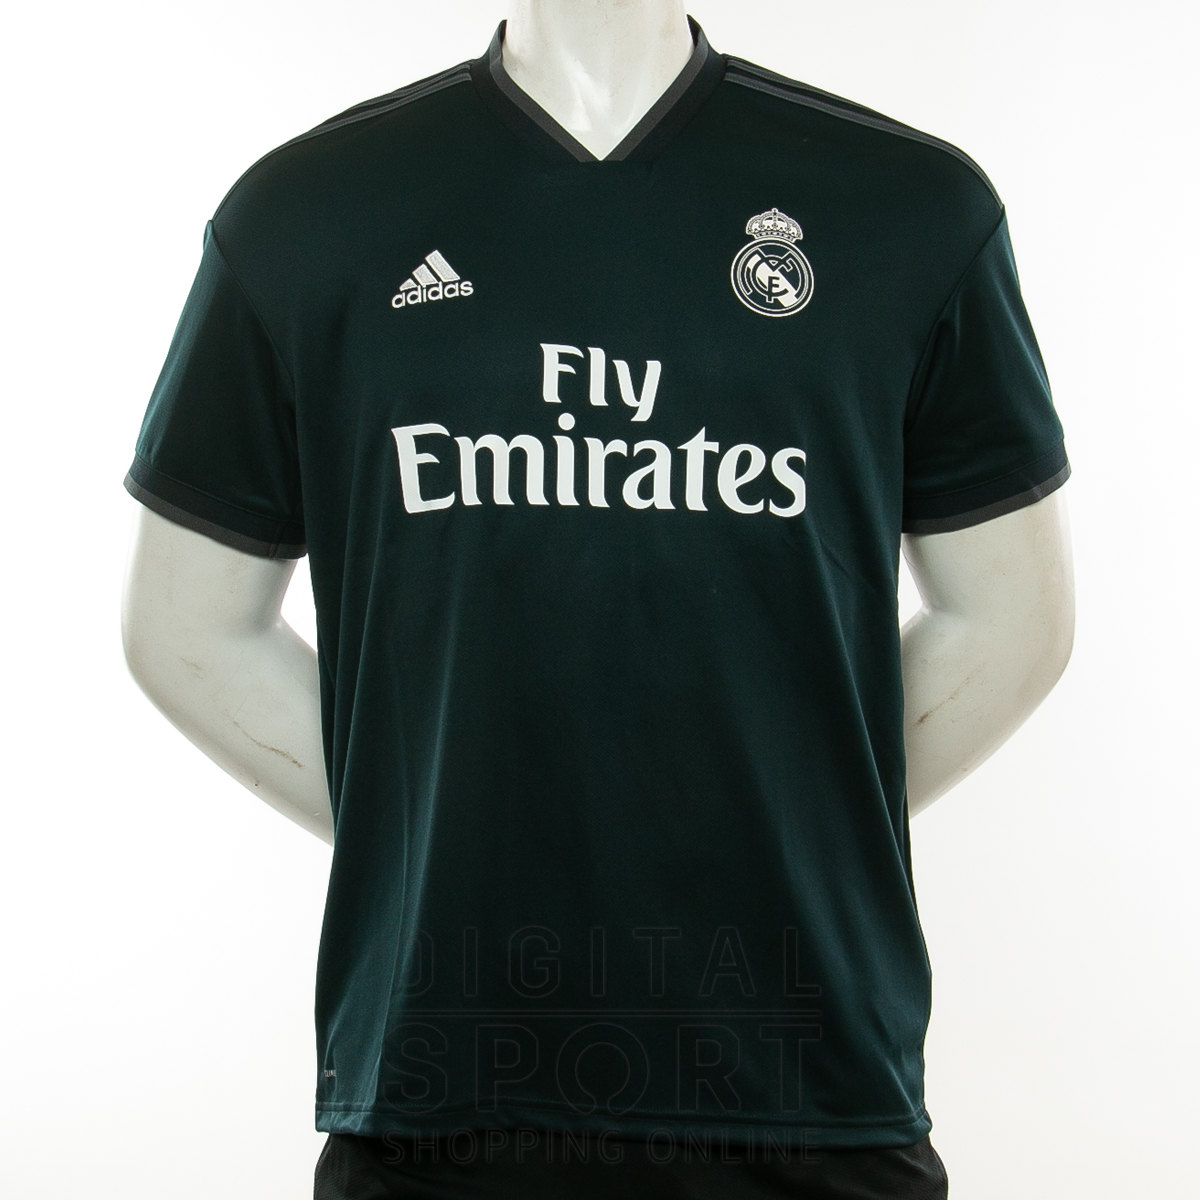 Real Madrid: se filtró la supuesta nueva camiseta suplente - TyC Sports